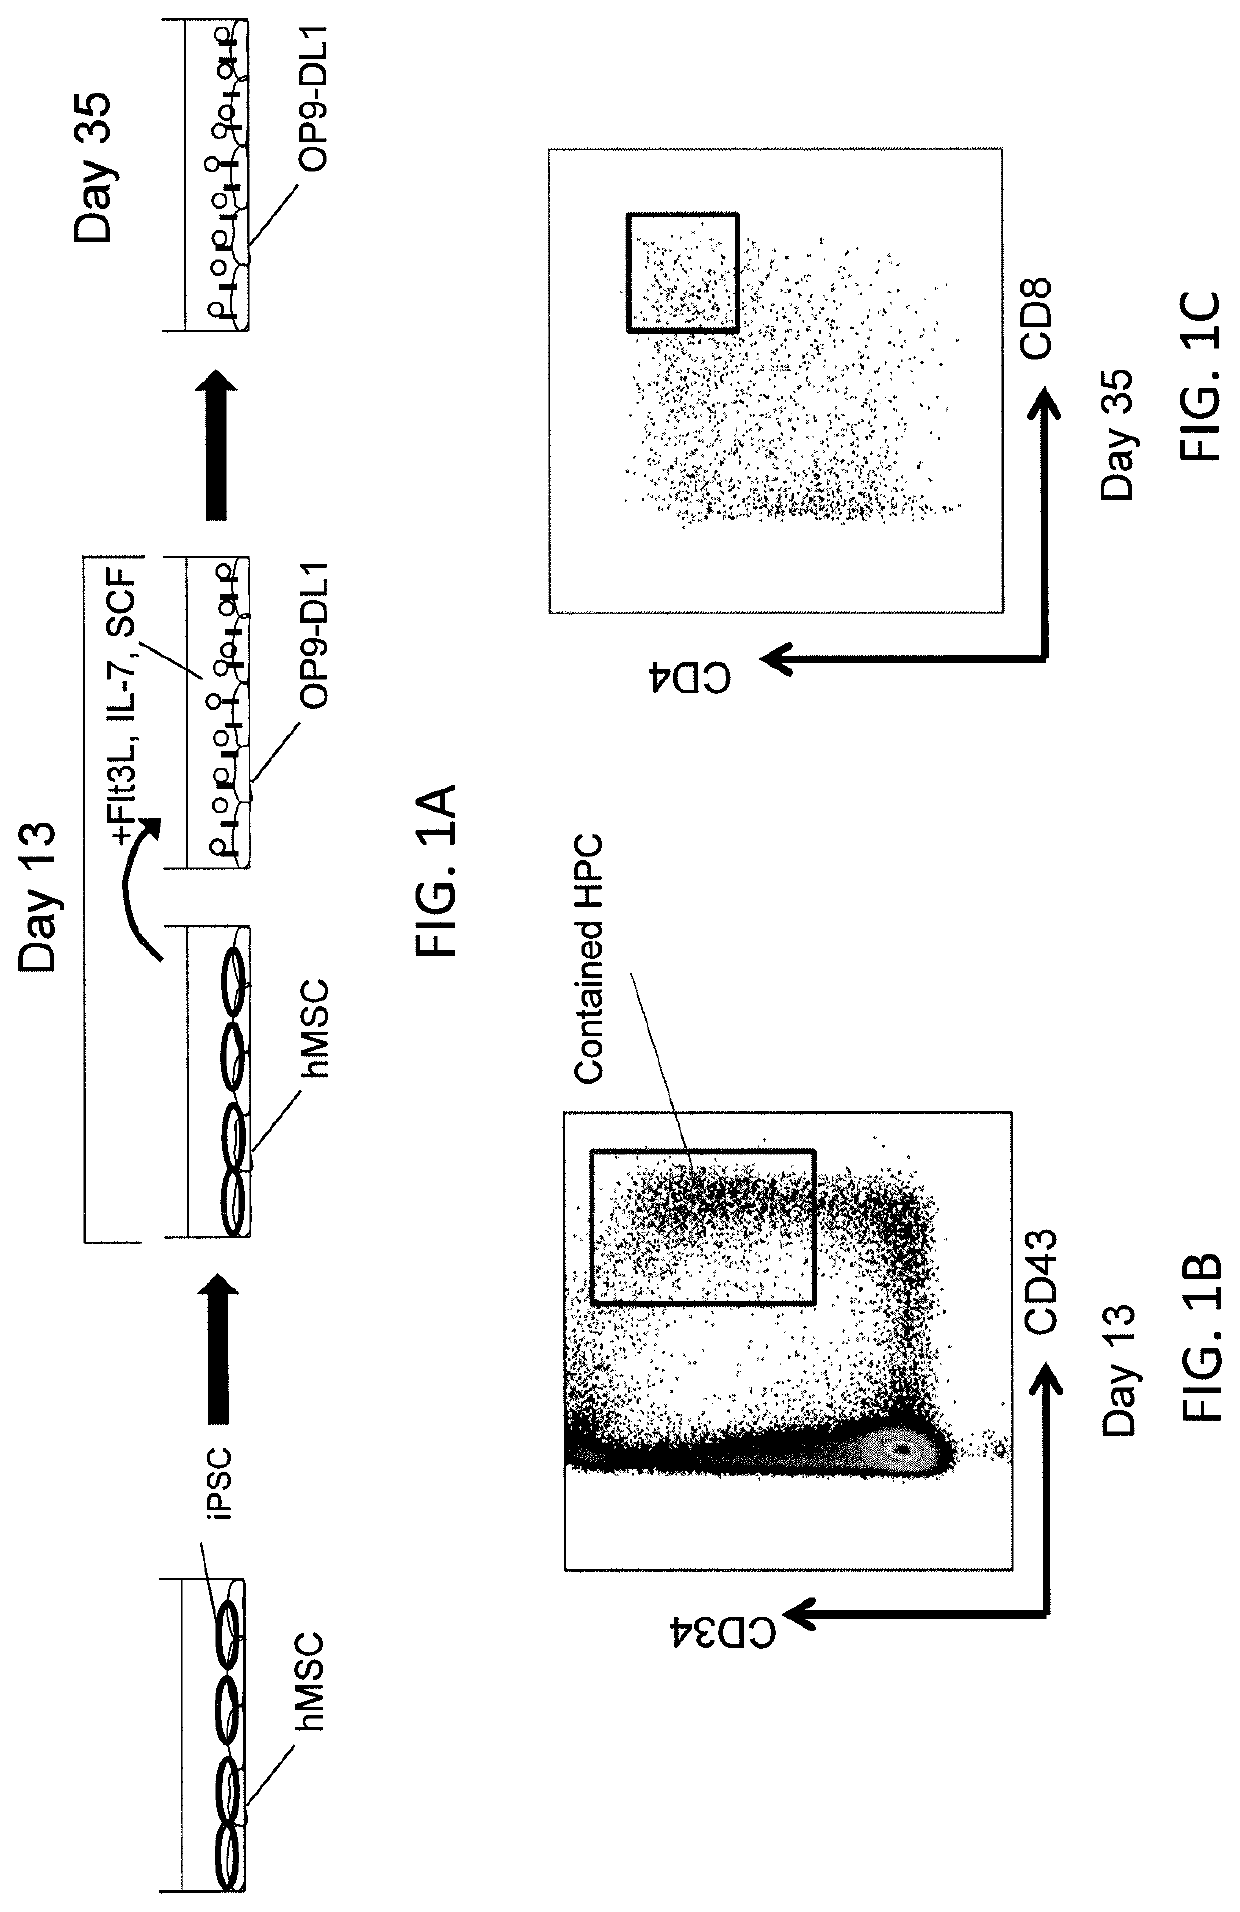 Methods of preparing hematopoietic progenitor cells in vitro